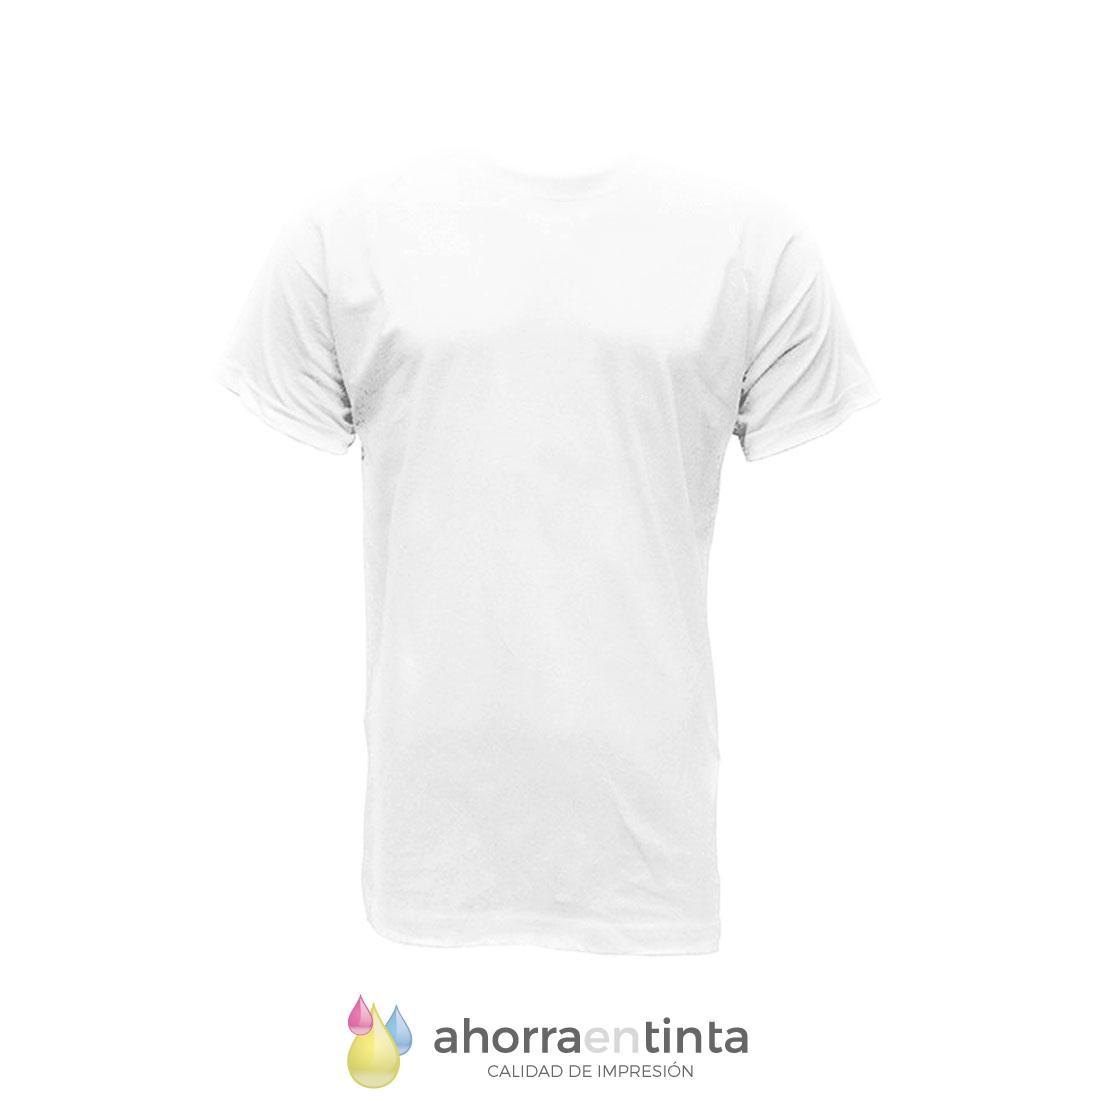 Camiseta Poliester Blanca 160gr -TACTO ALGODON- ANBOR Bonny HOMBRE. Tallas XS a 3XL